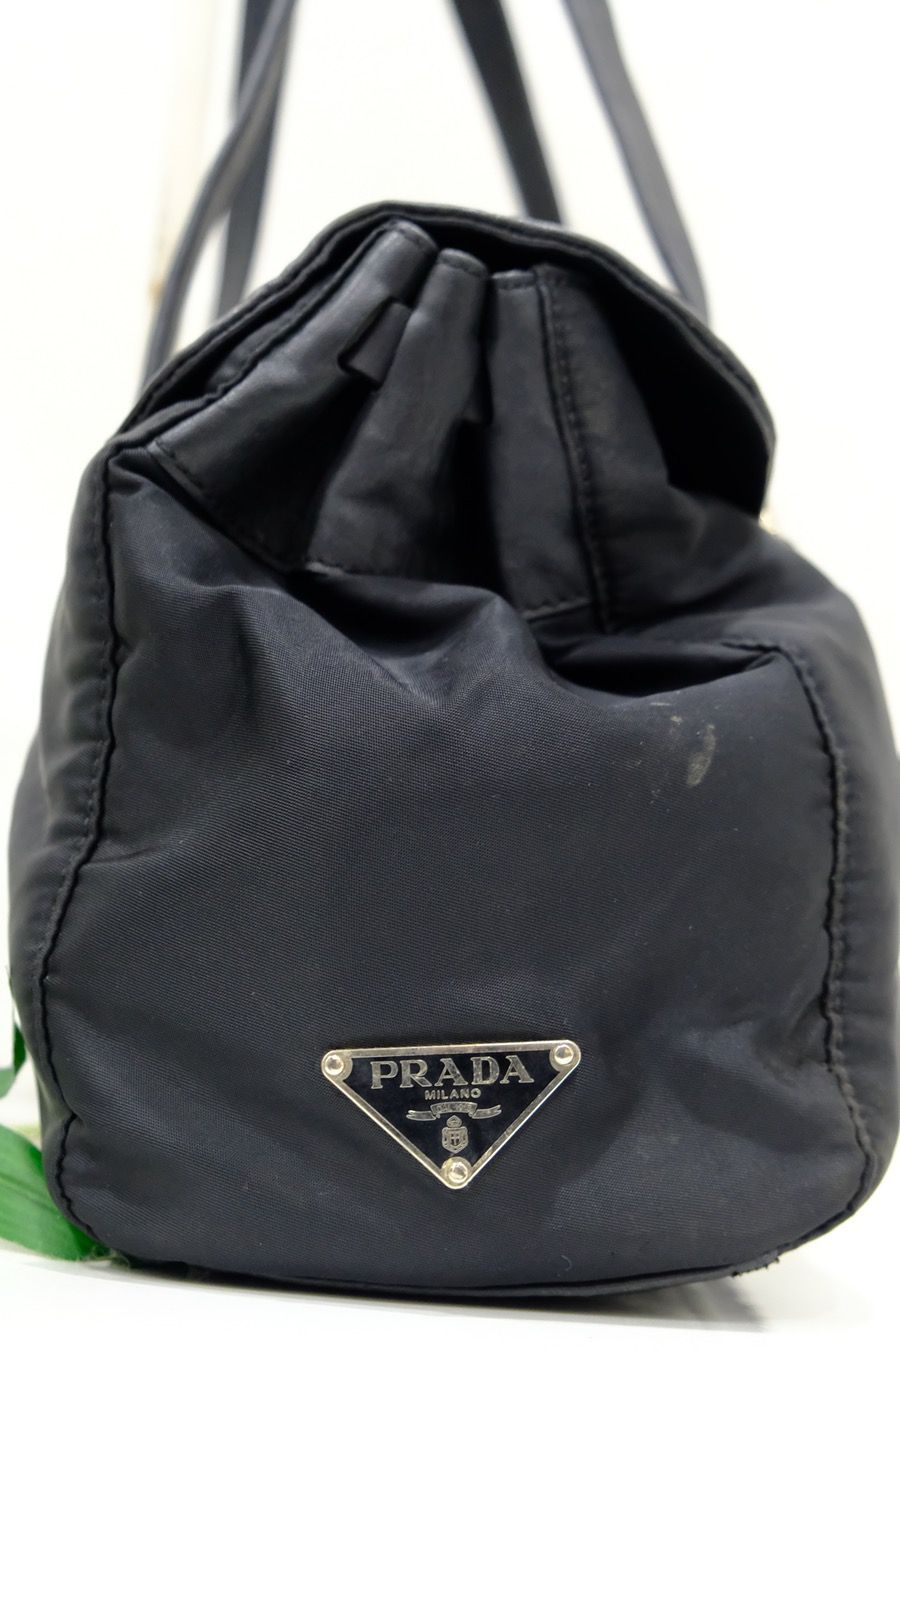 Authentic Black Prada handbag leather and nylon - 8